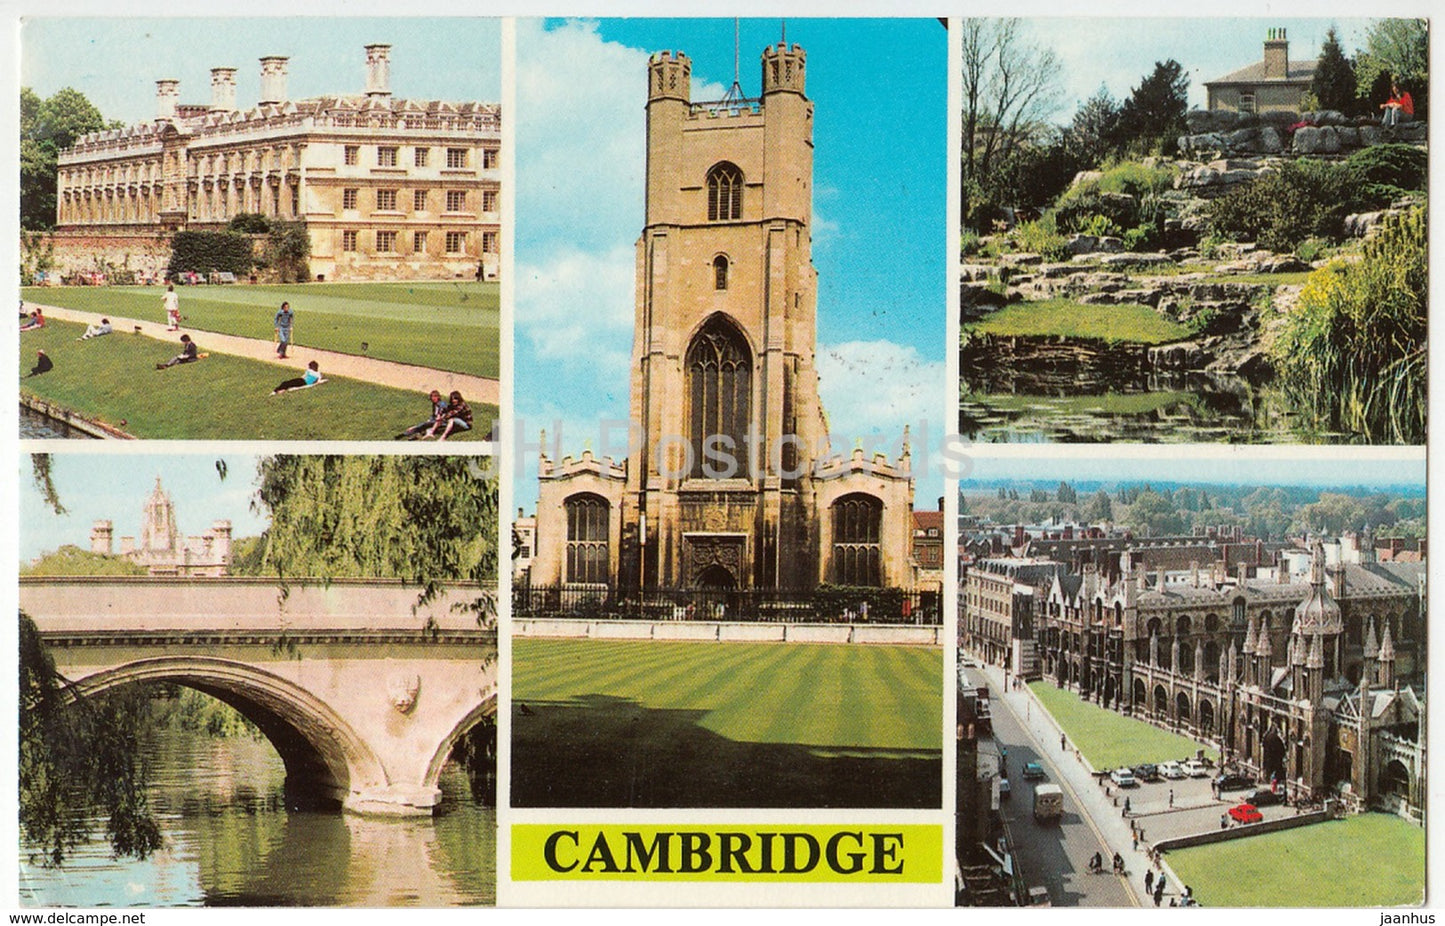 Cambridge - College - Botanical Gardens - church - multiview - CAM 188 - 1960 - United Kingdom - England - used - JH Postcards